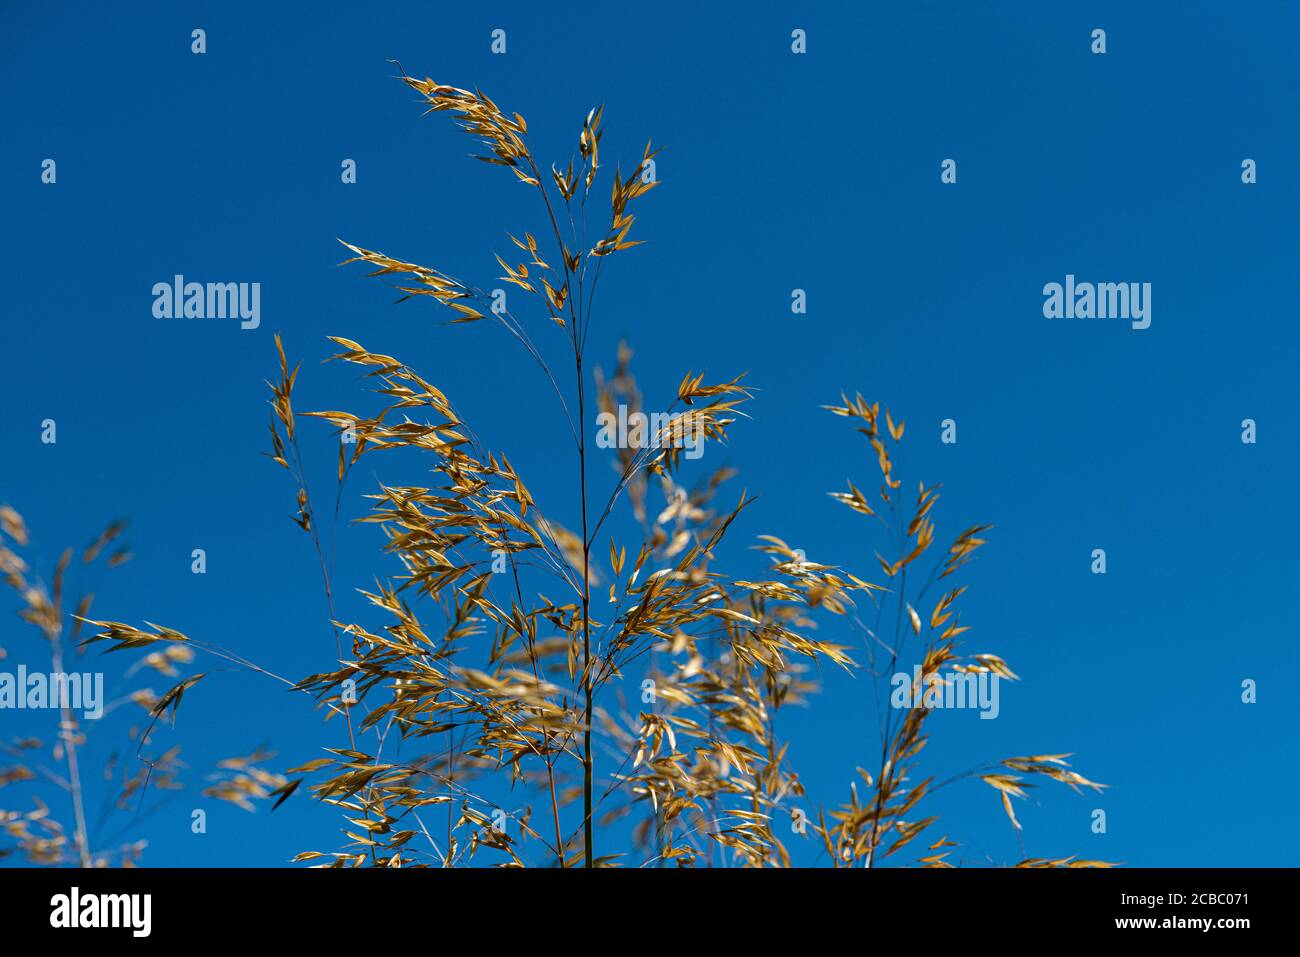 Golden oats (Stipa gigantea) against a blue sky Stock Photo